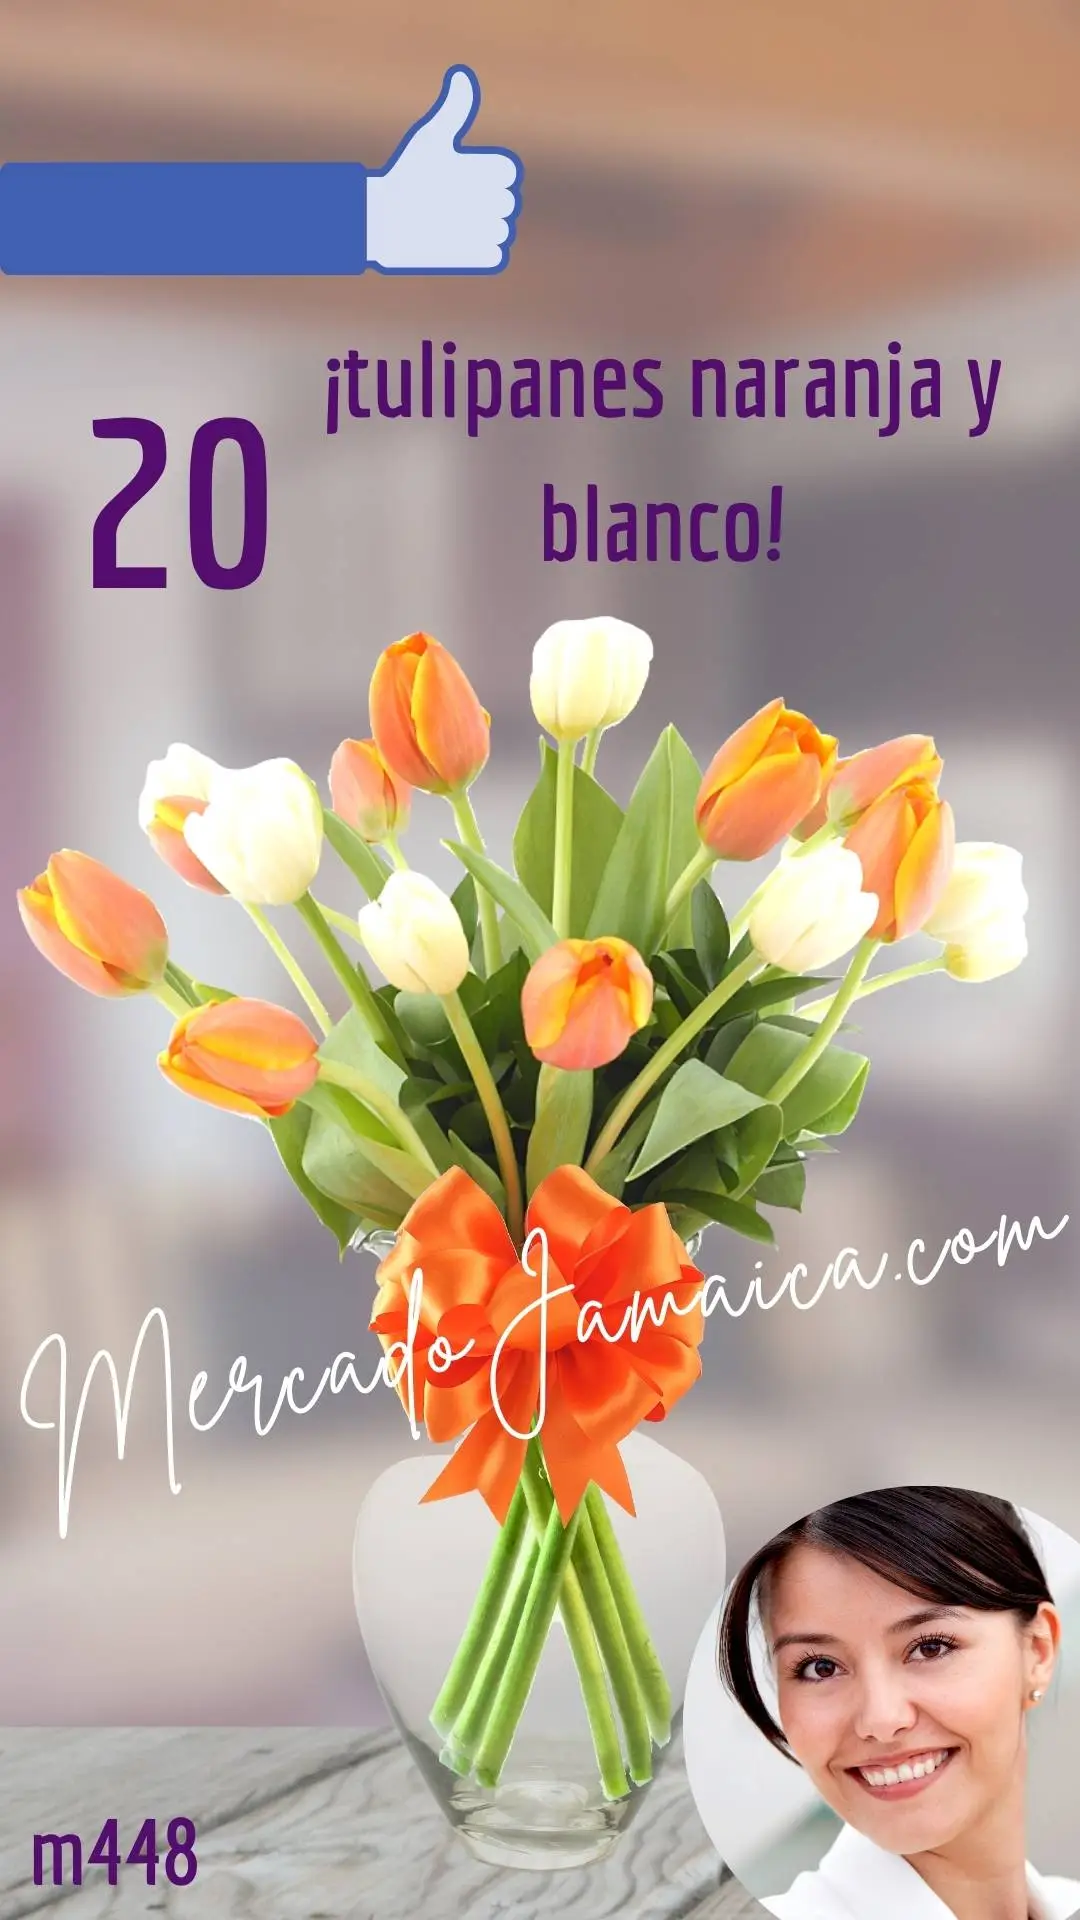 Florerias en Mexico 20 Tulipanes